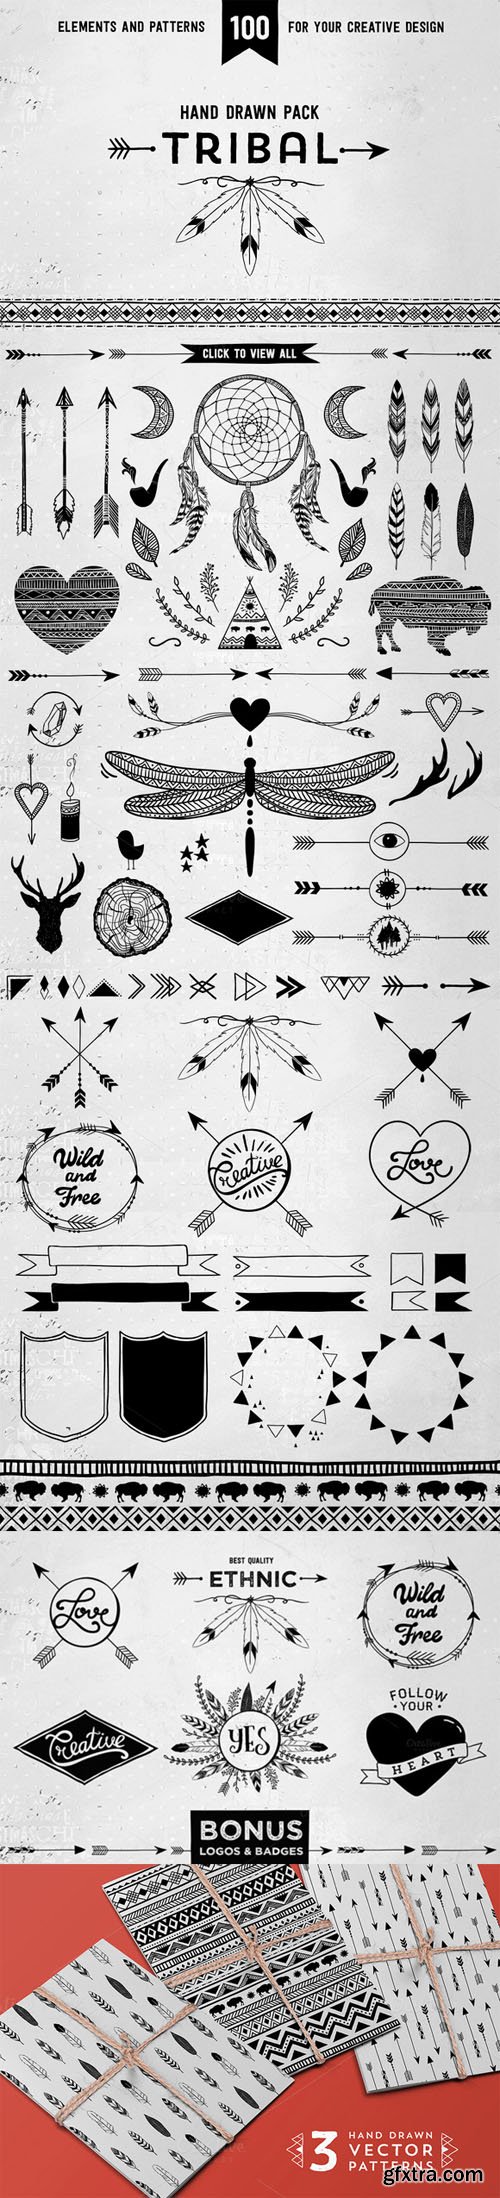 Hand drawn tribal design vector pack - CM 137661